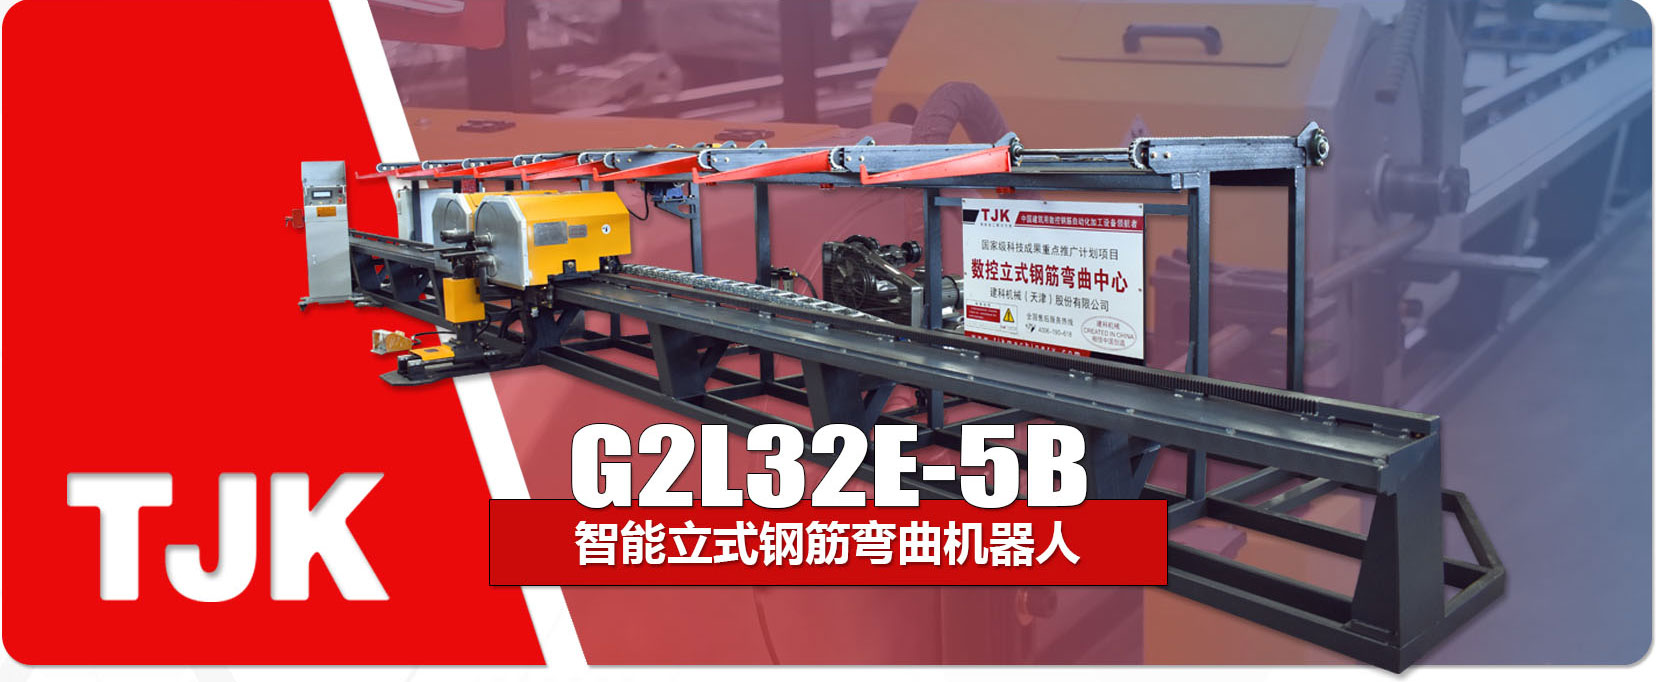 G2L32E-5B产品特点_03.jpg